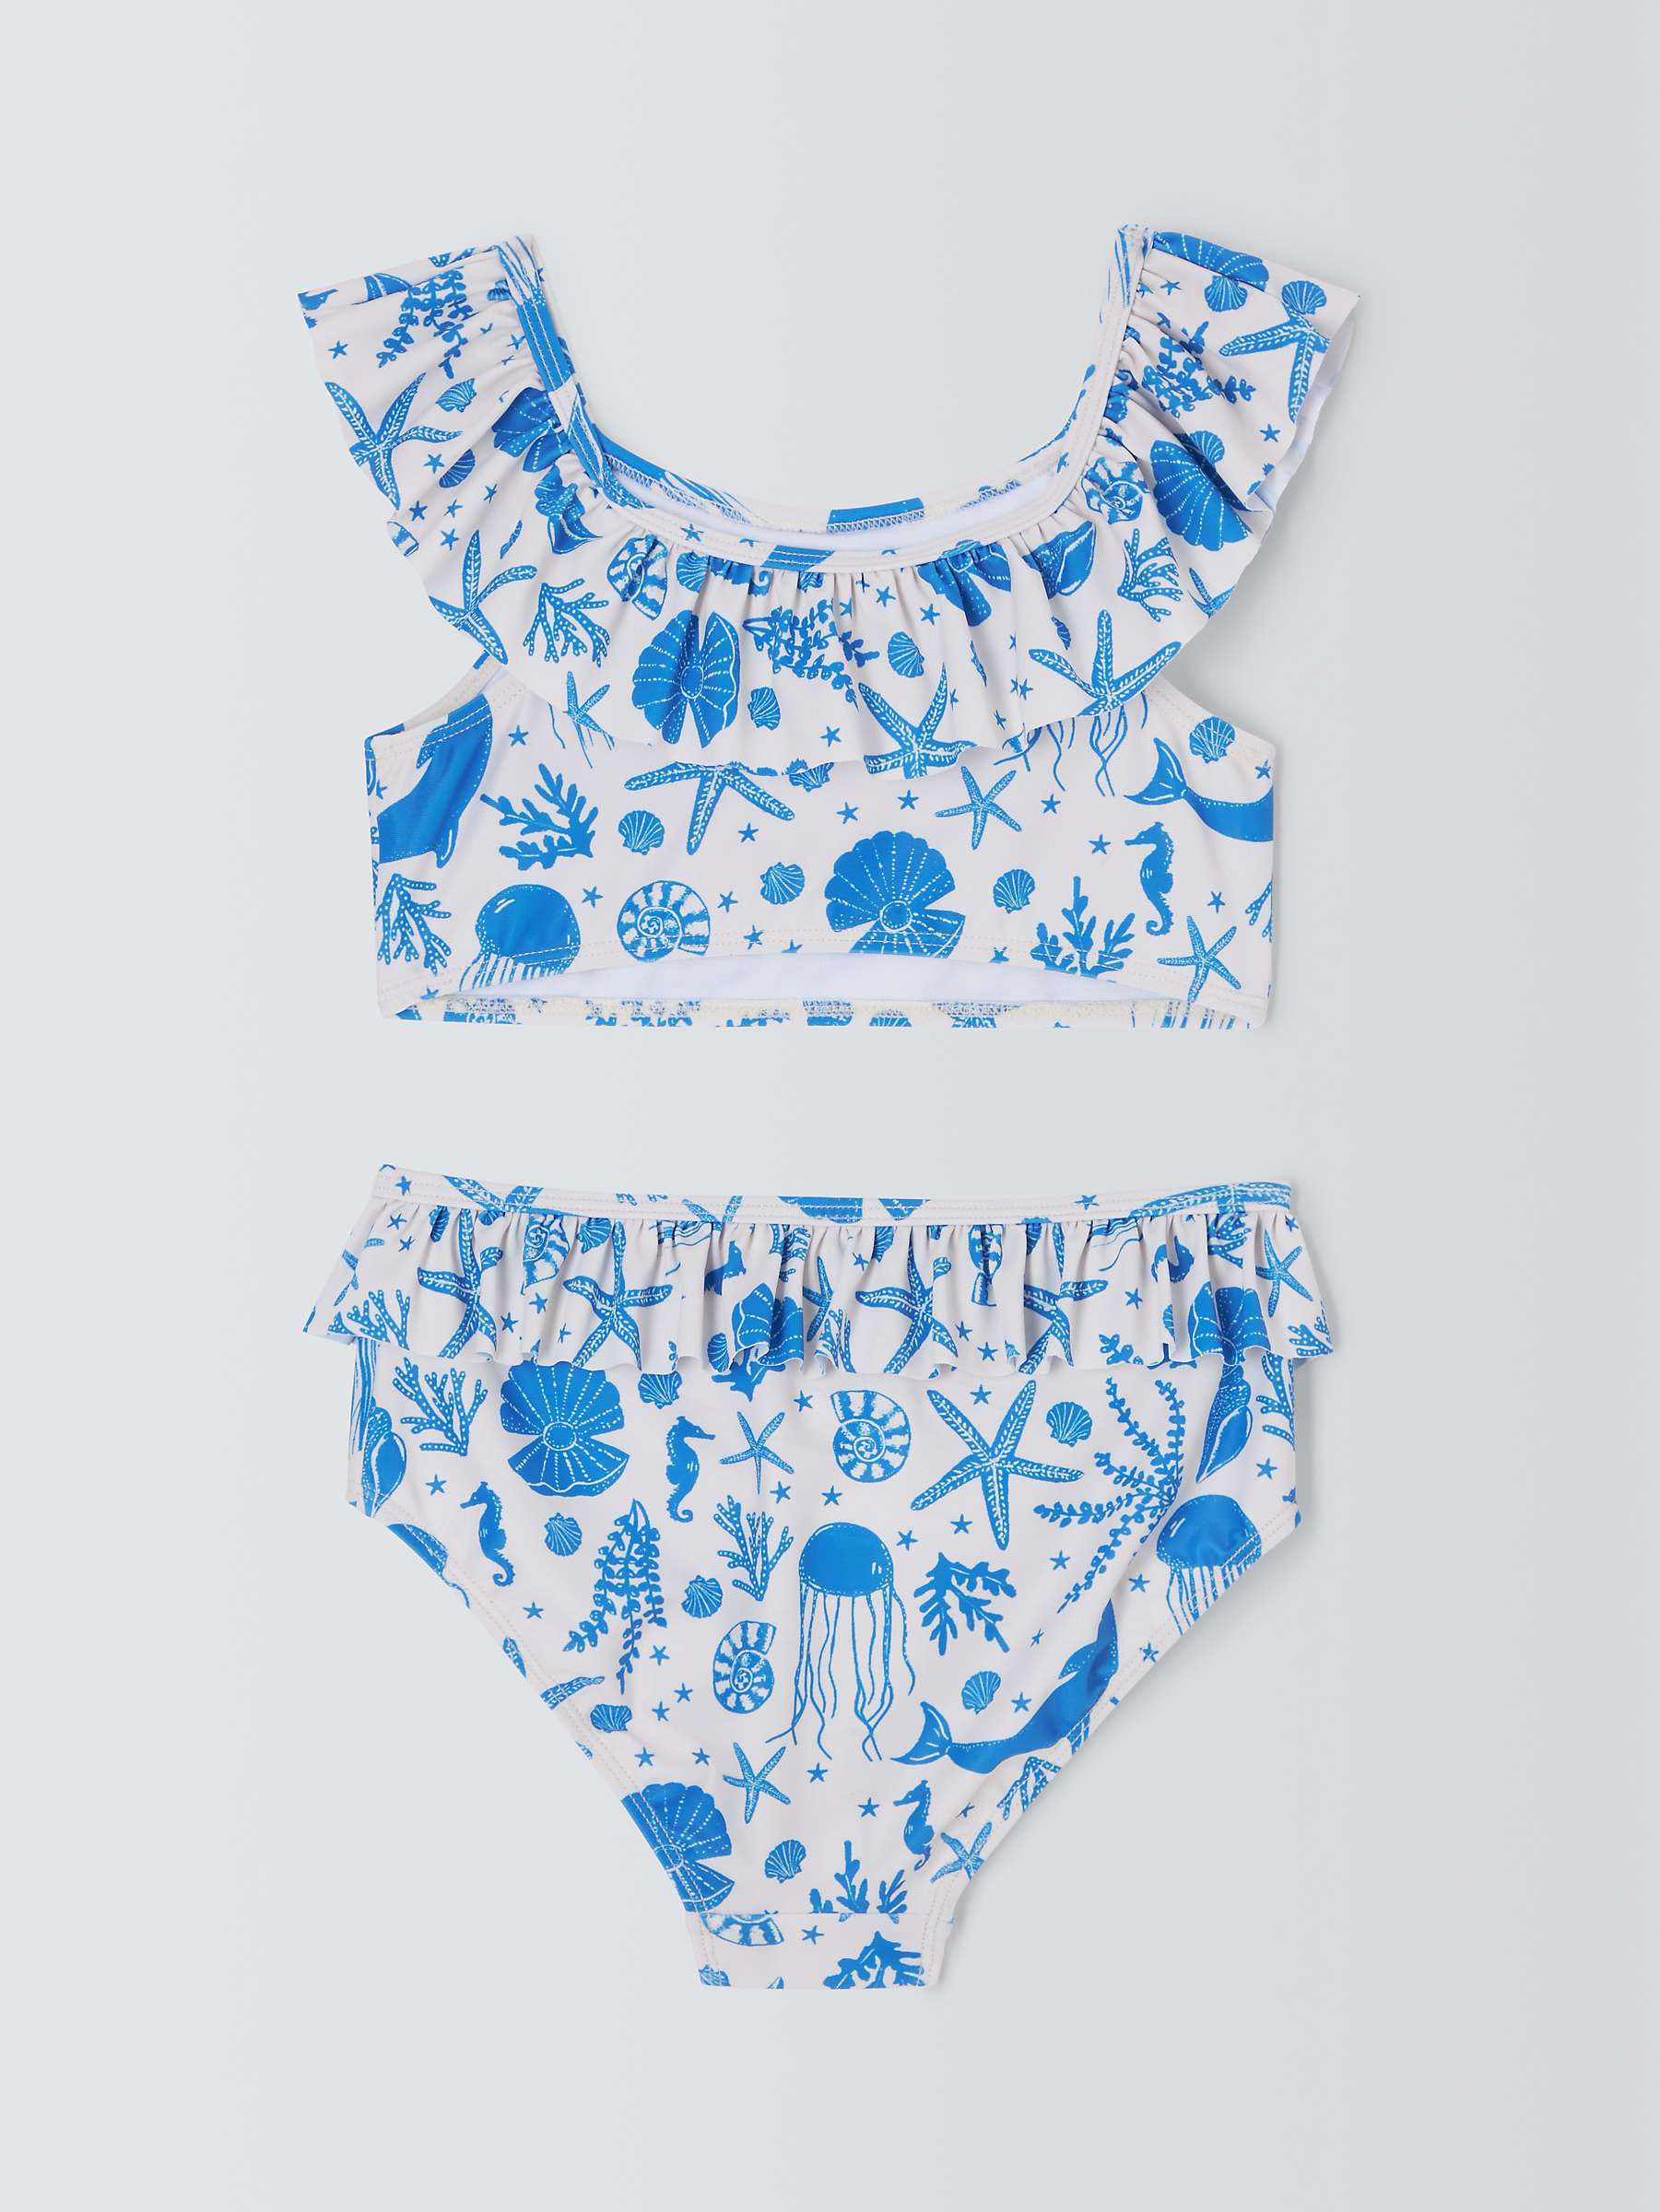 Buy John Lewis Kids' Under The Sea Print Frill Bikini, Blue Online at johnlewis.com